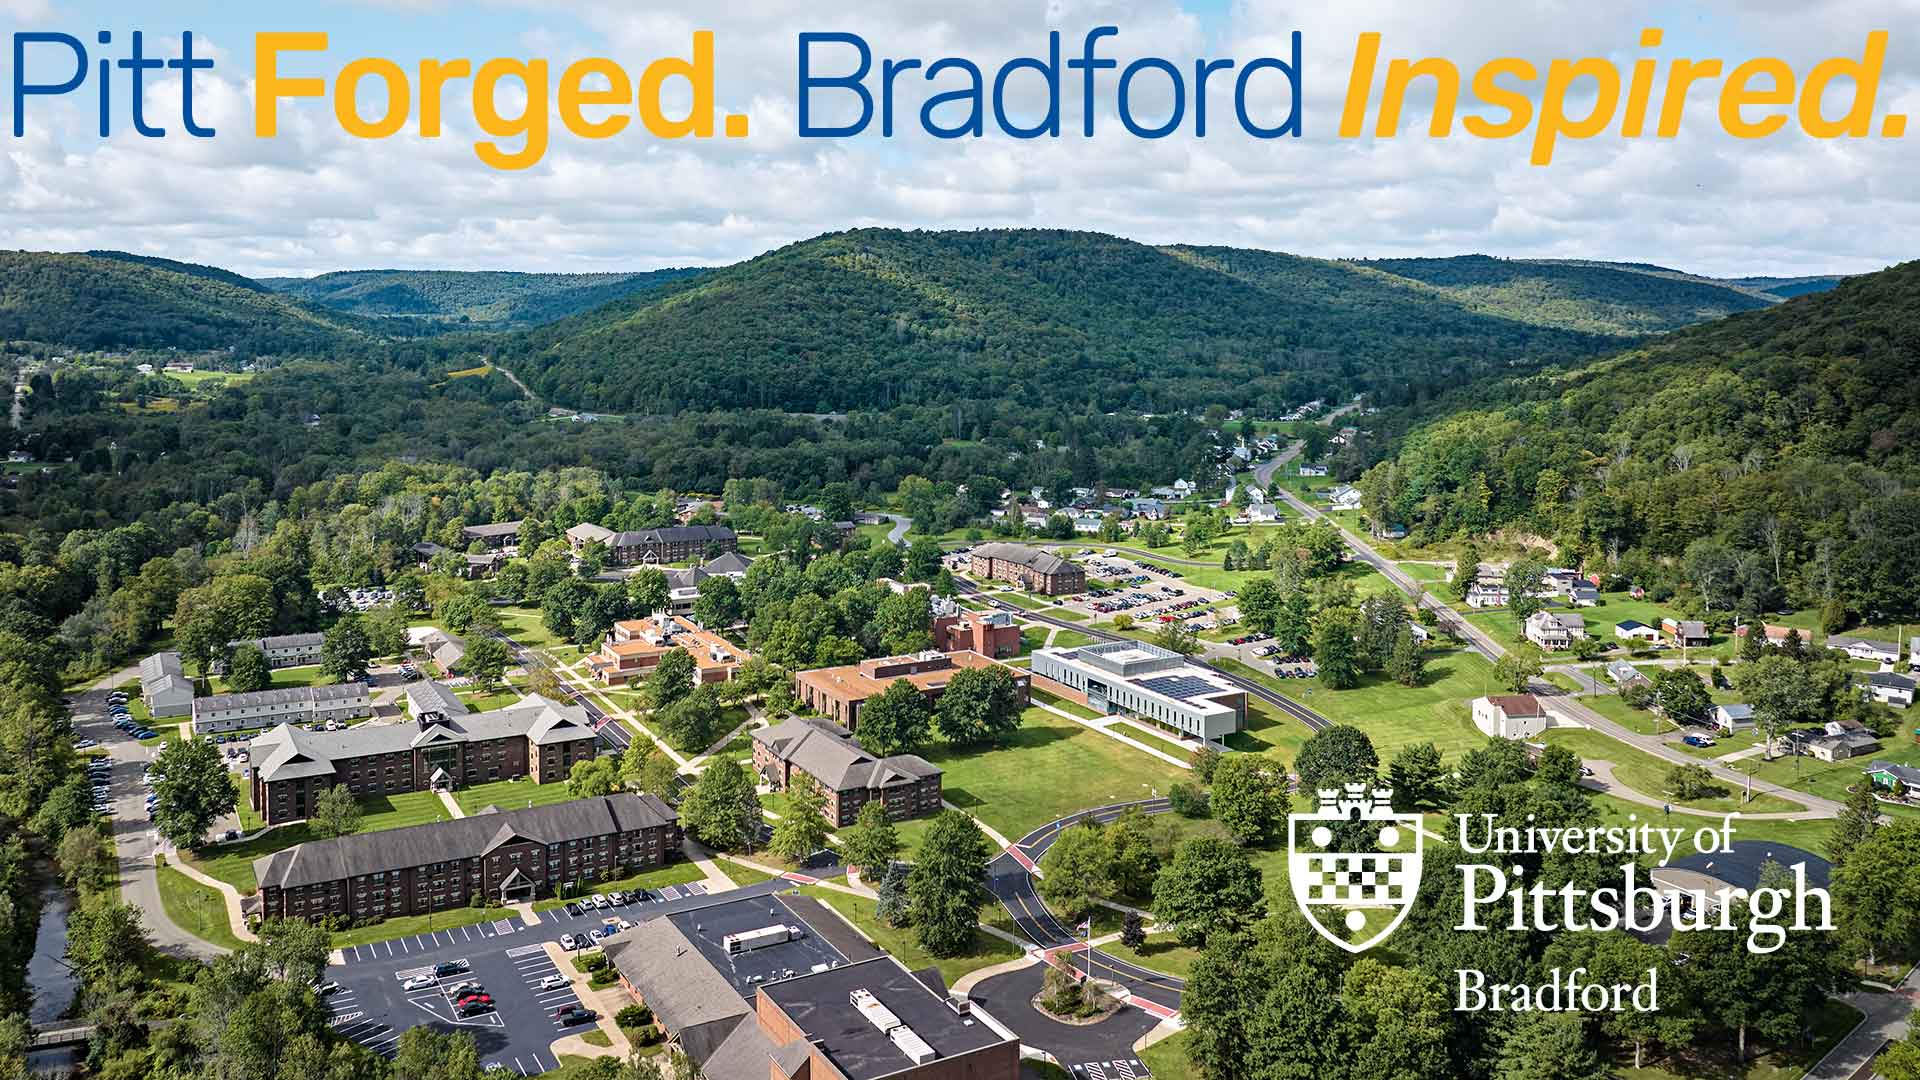 Pitt Forgrged. Bradford Inspired background 1 screen